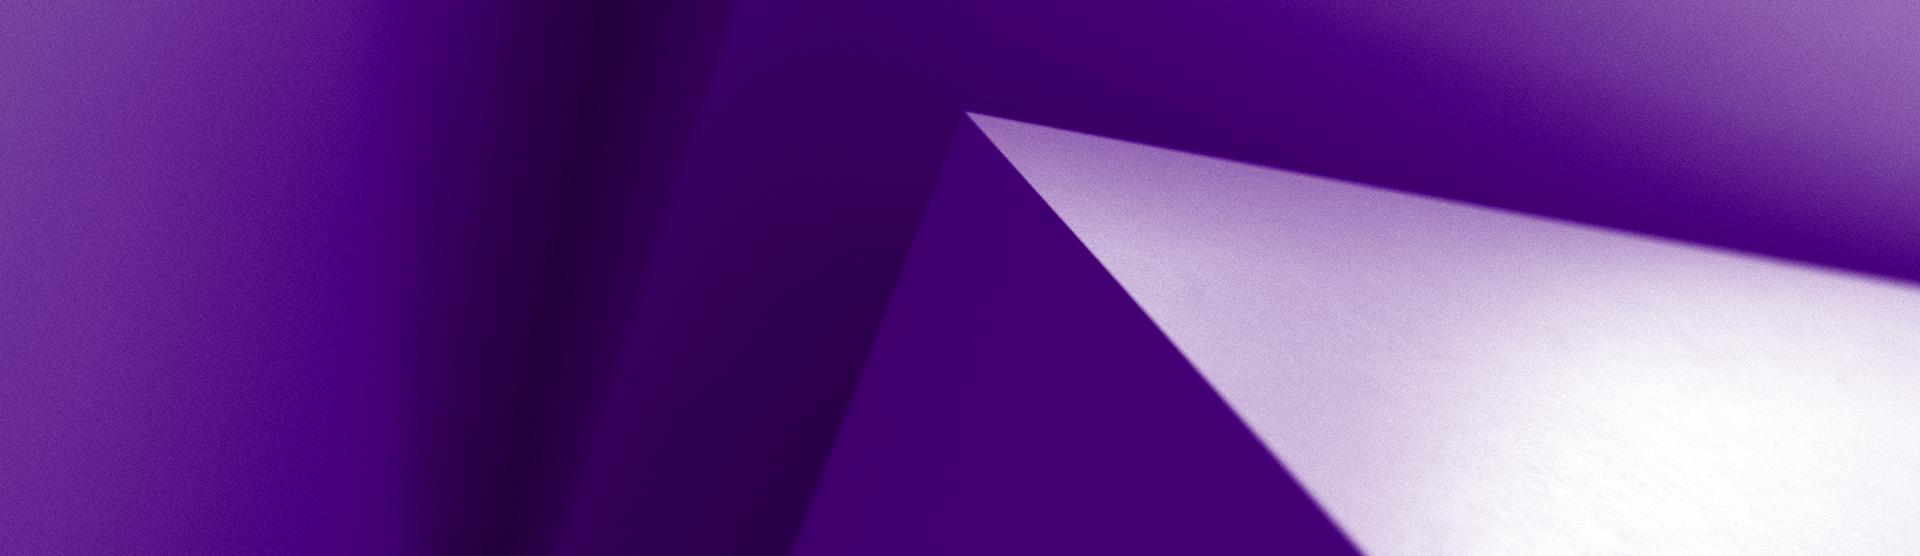 rra-background-purple-8.jpg